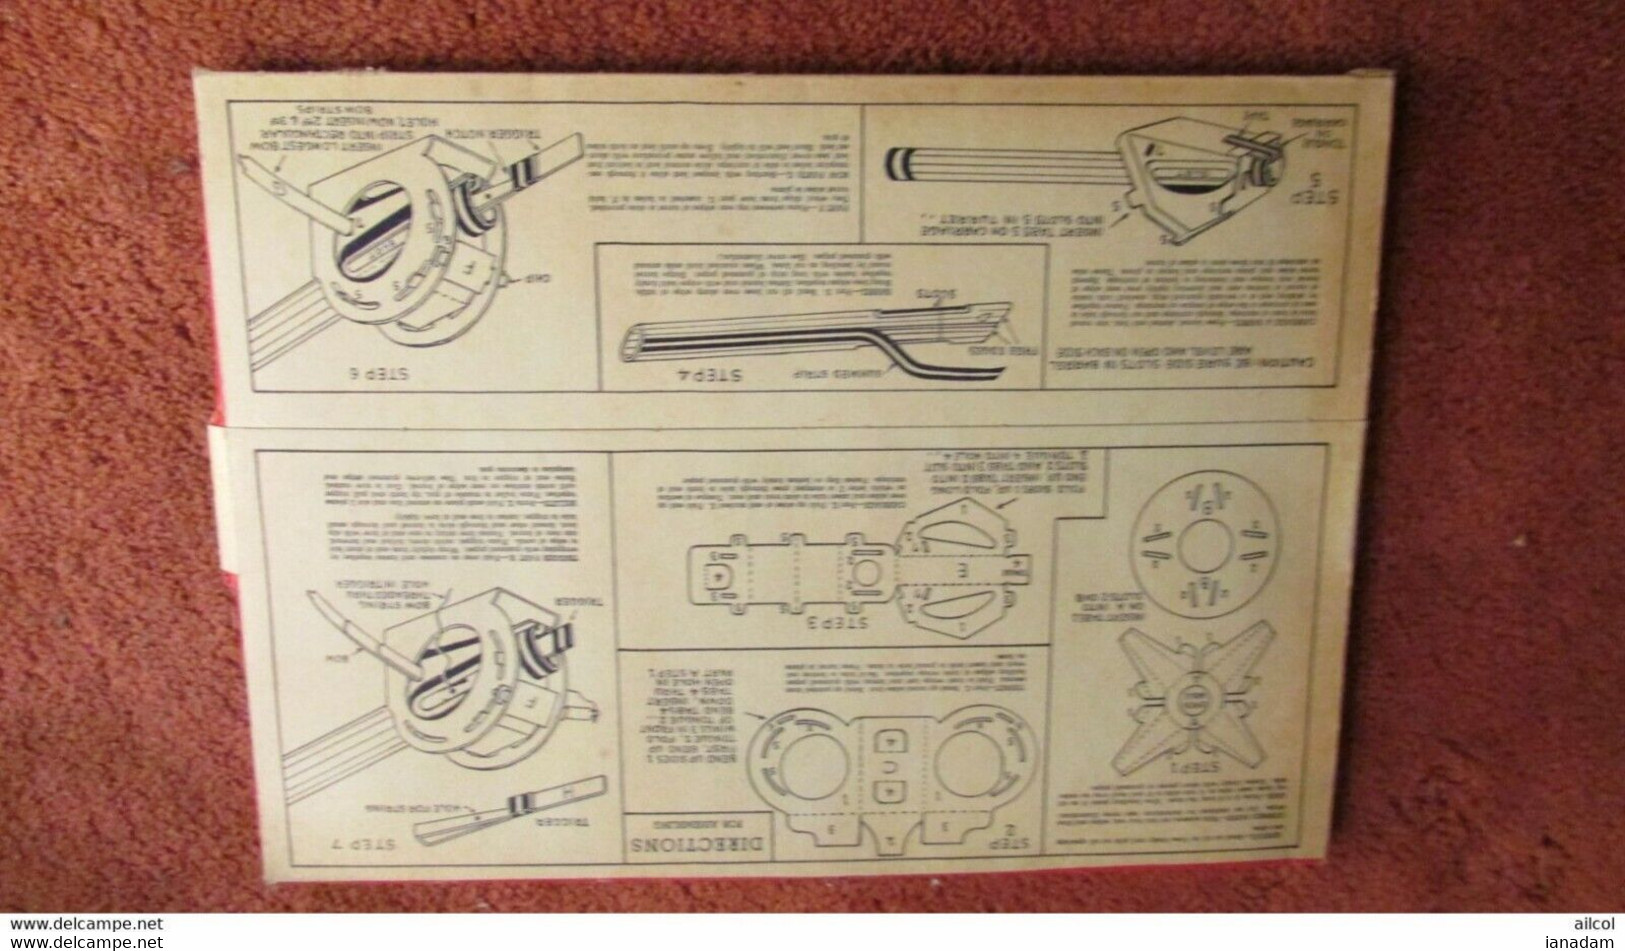 Original Unopened WW2 US Anti-Aircraft Gun Paper Toy - 1939-45